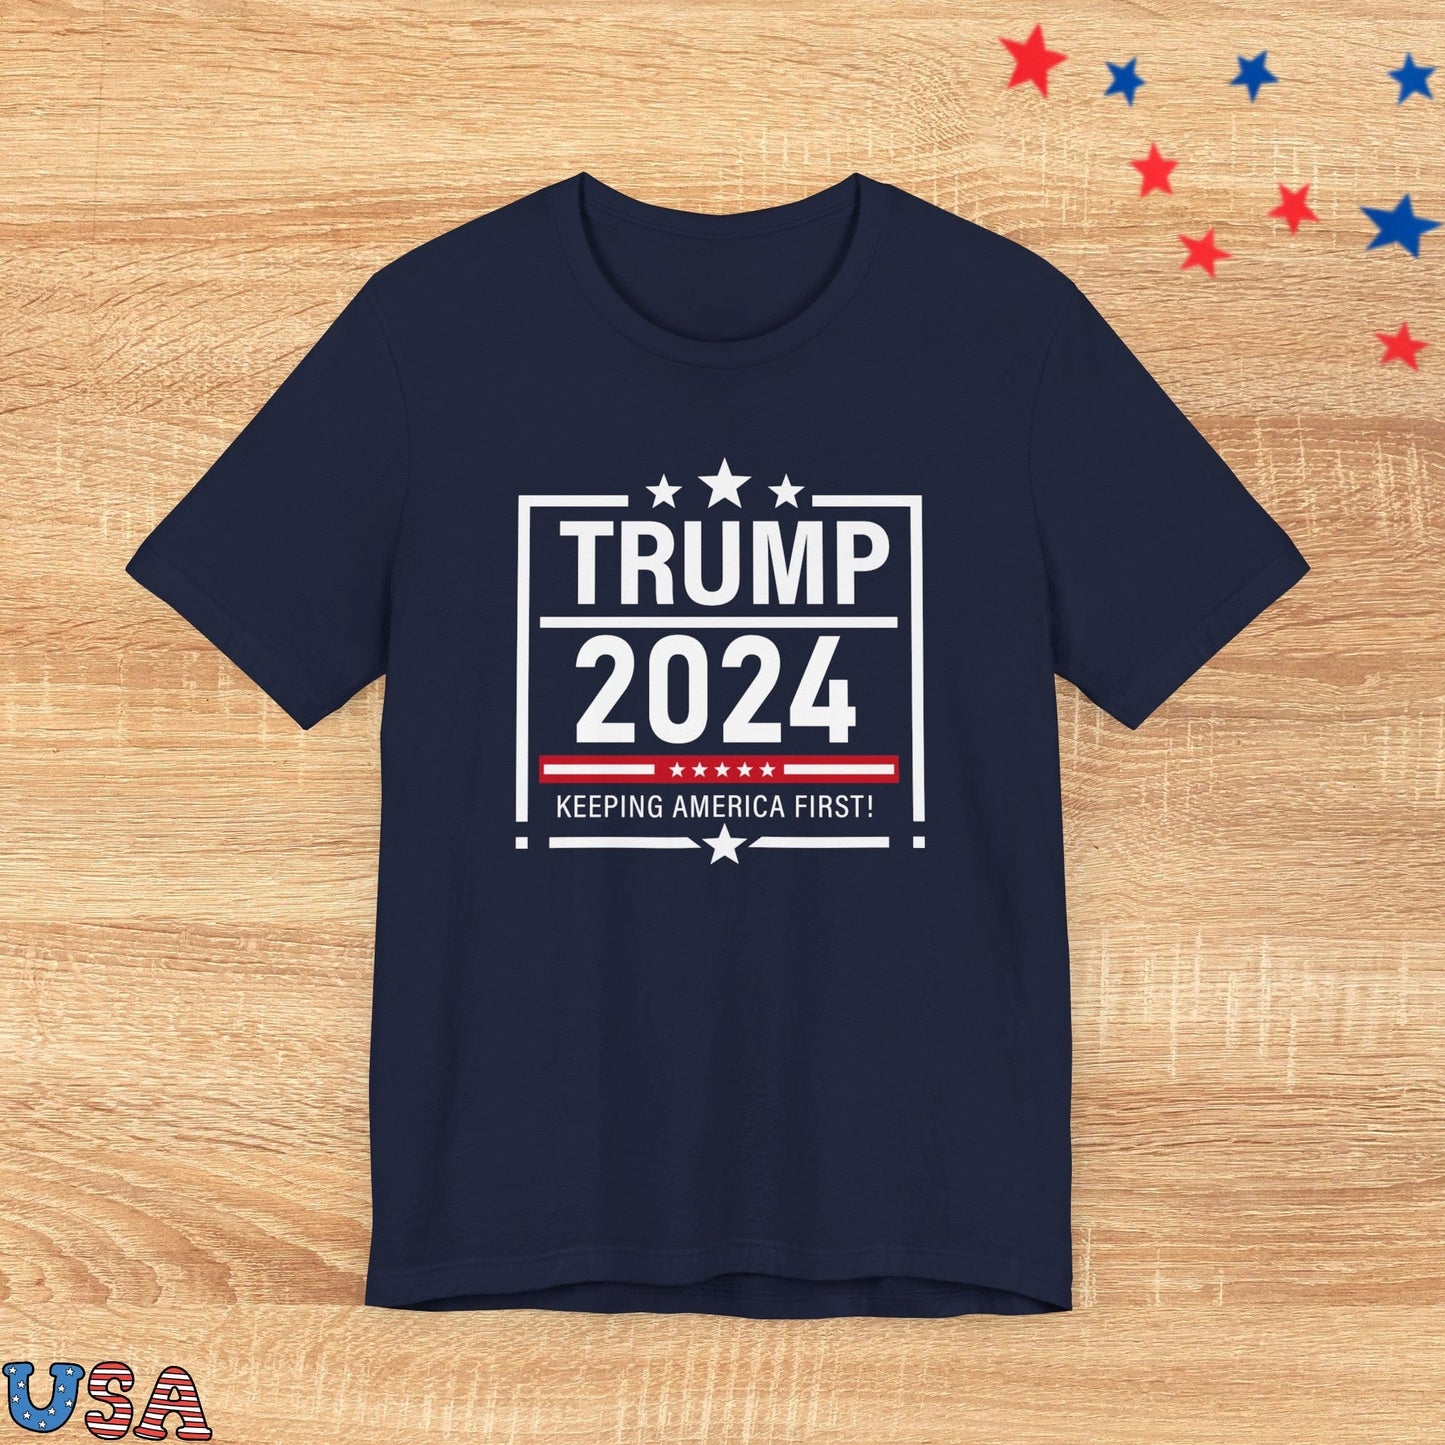 patriotic stars T-Shirt Navy / XS Keeping America First!